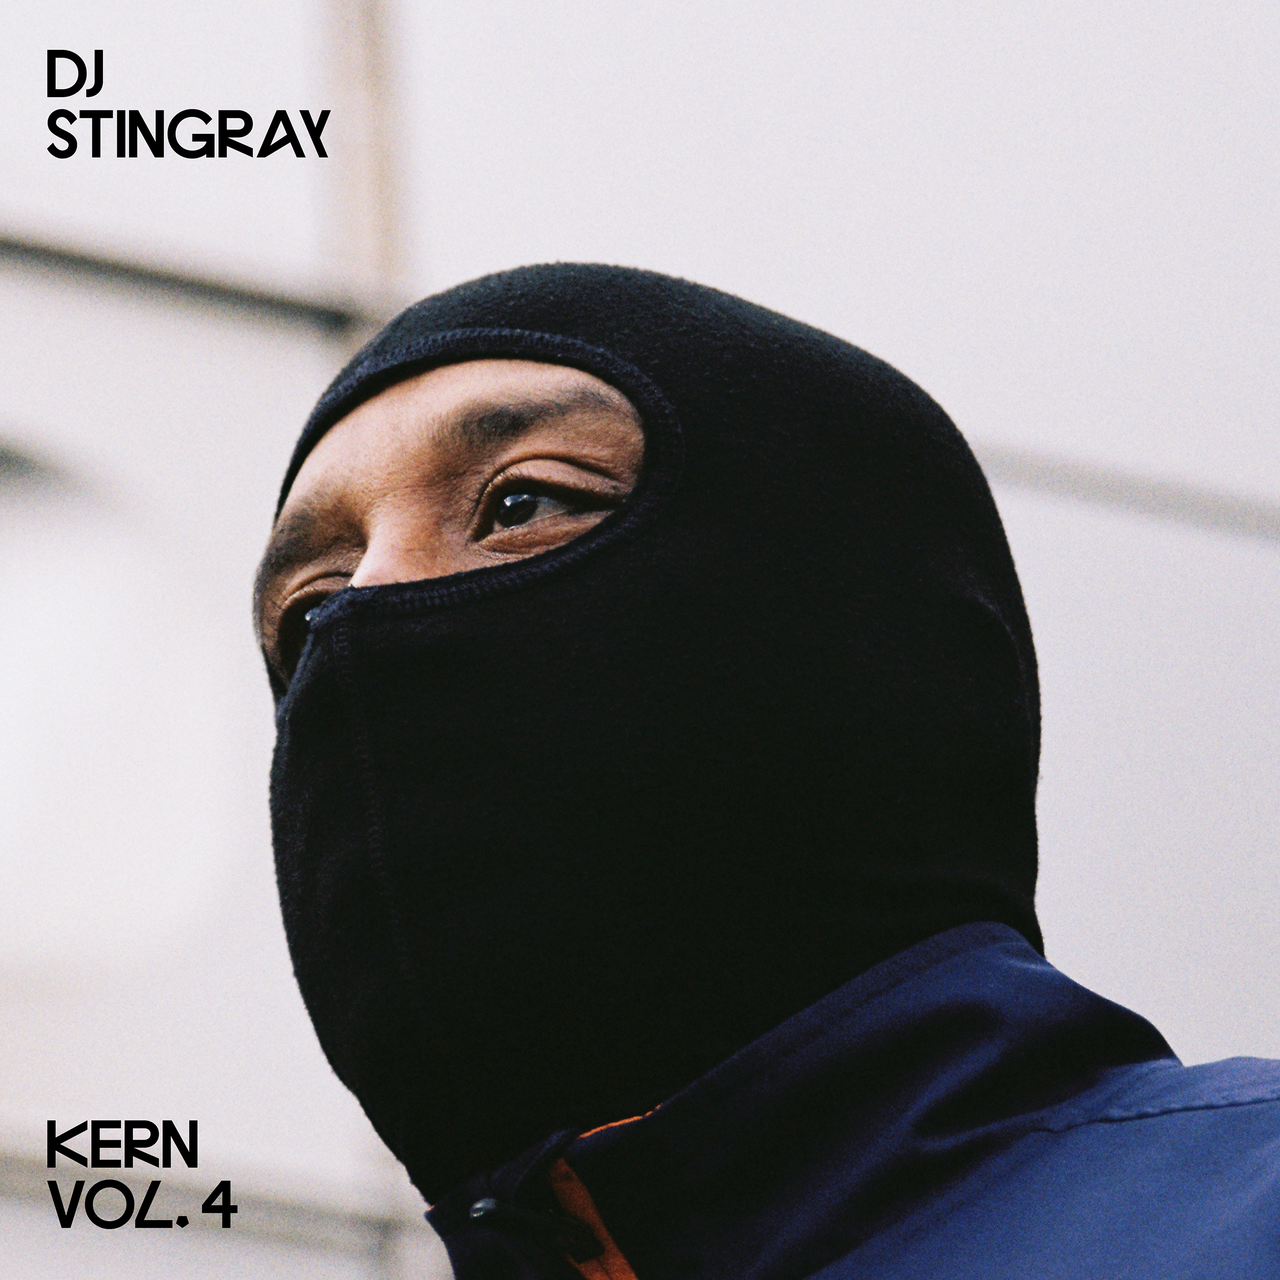 DJ Stingray for Tresor Kern Vol. 4 Compilation